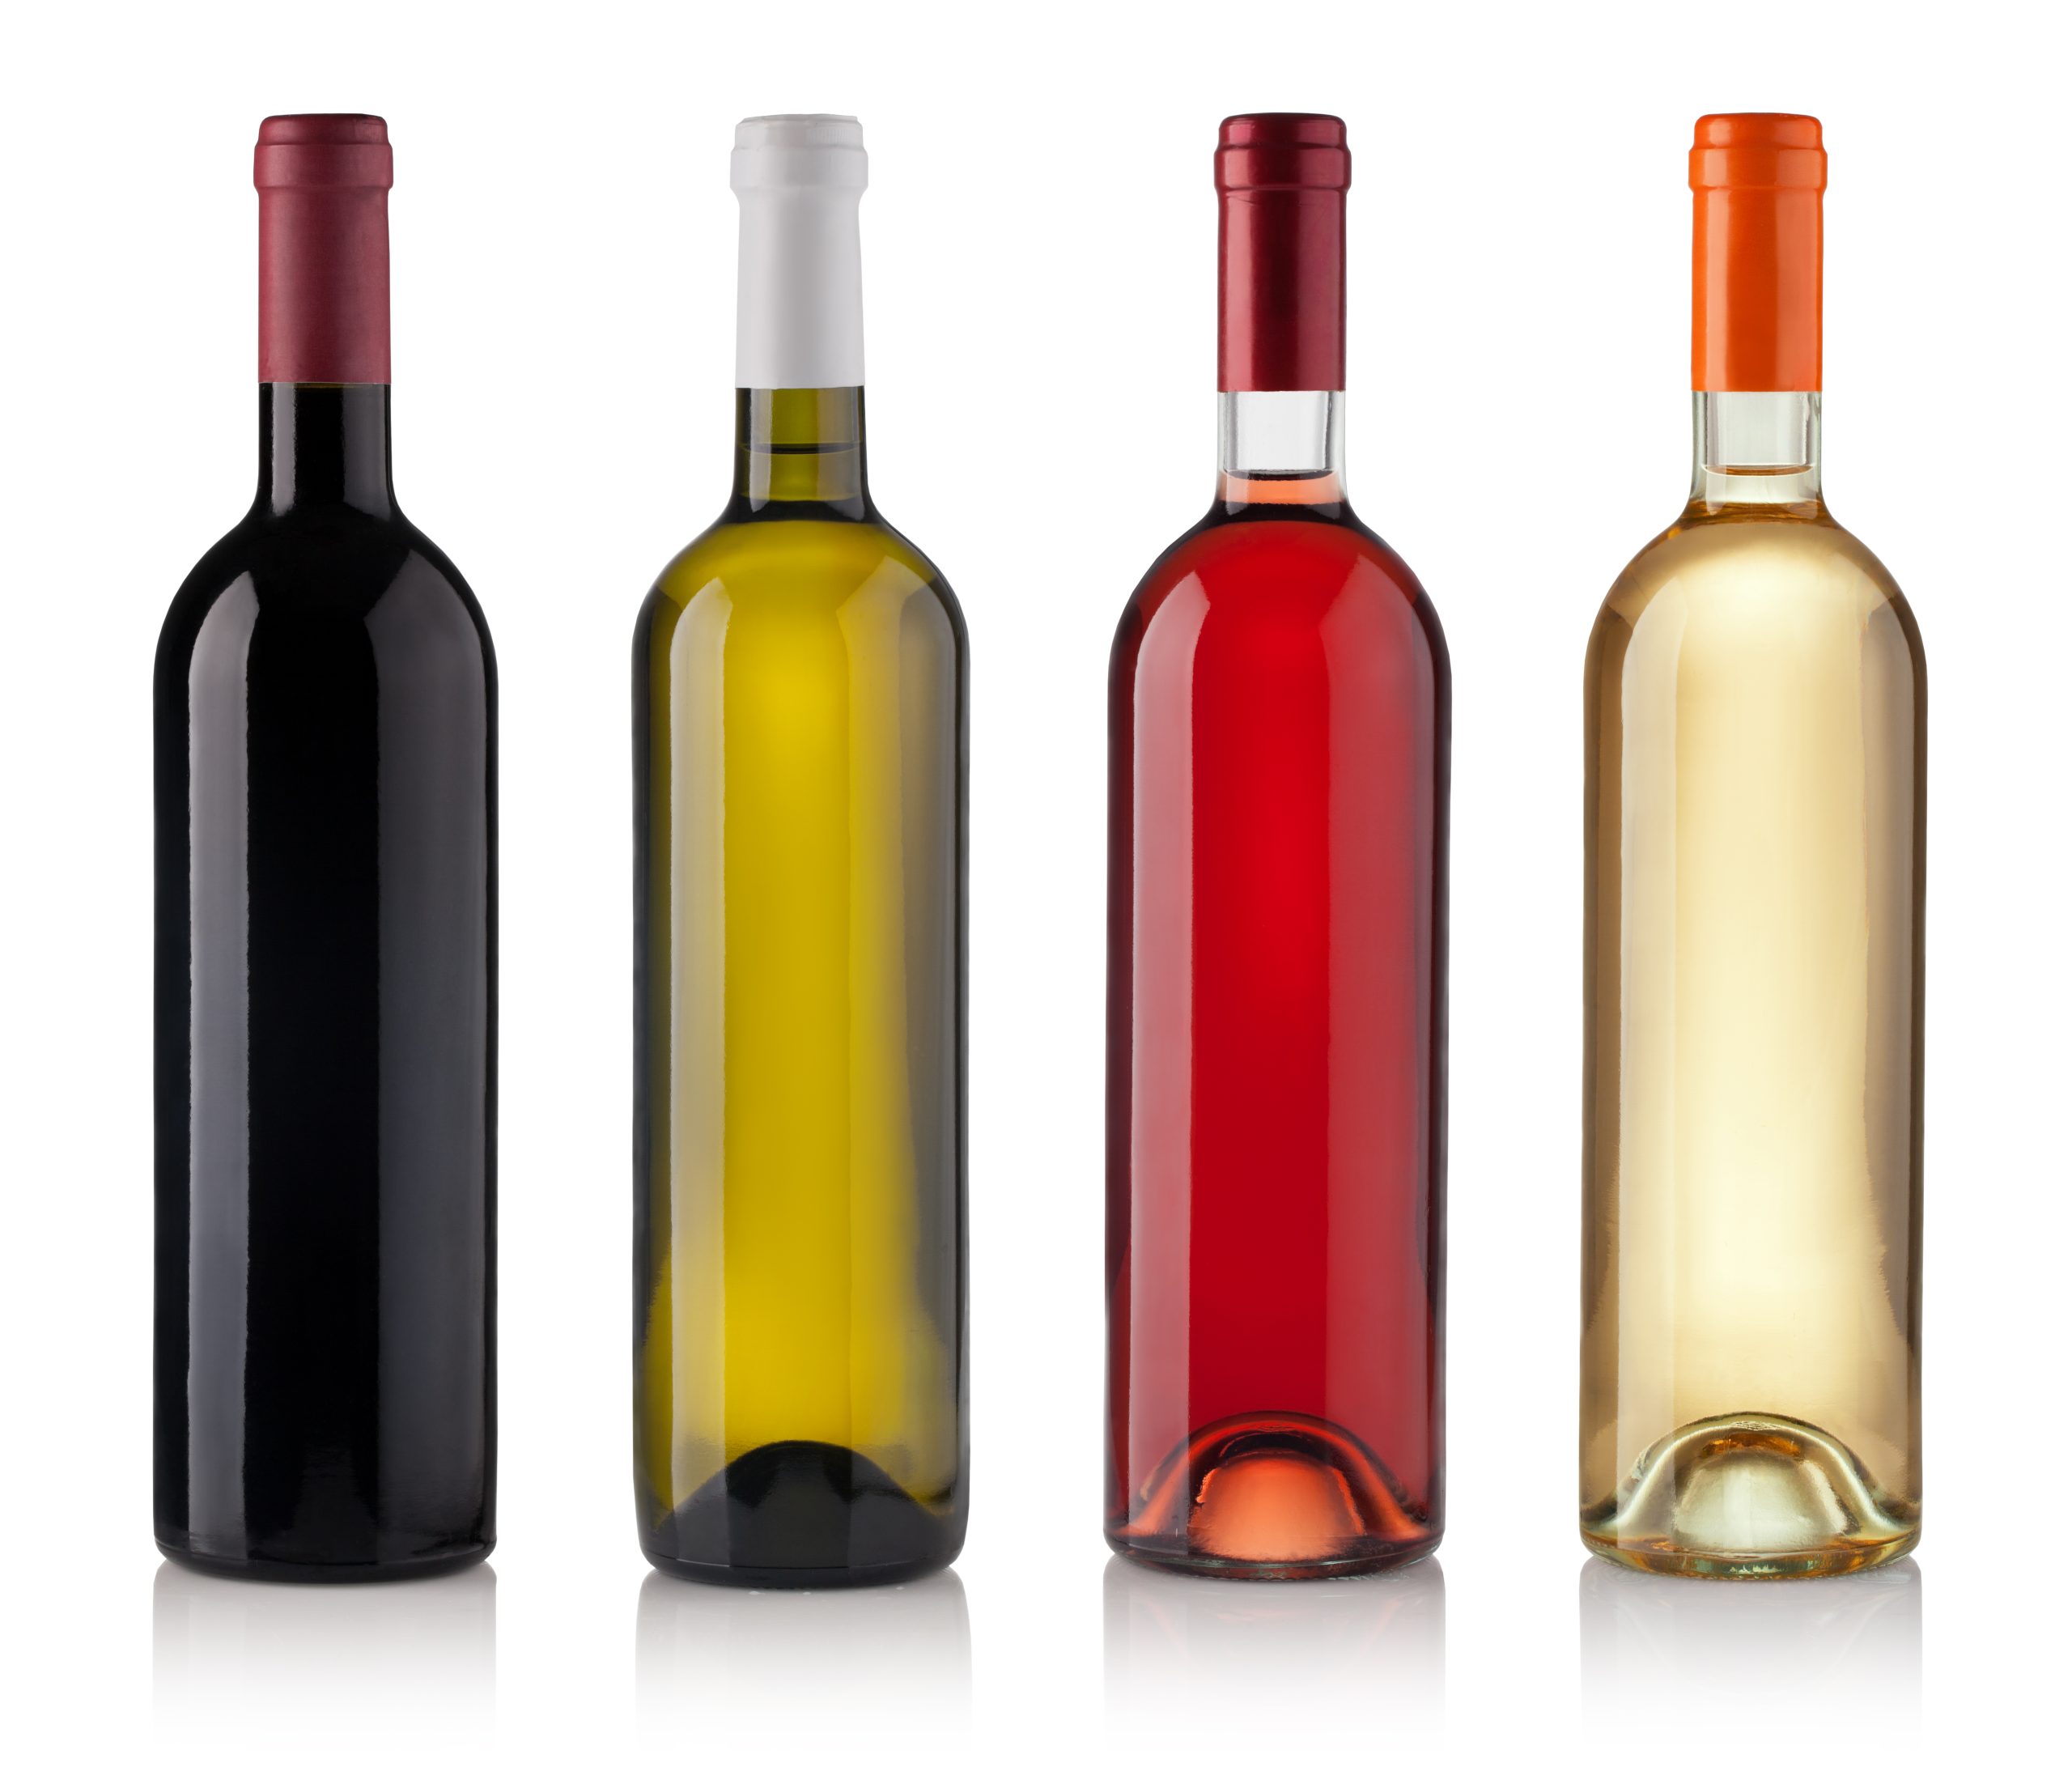 Wine Bottles iStock 521210524